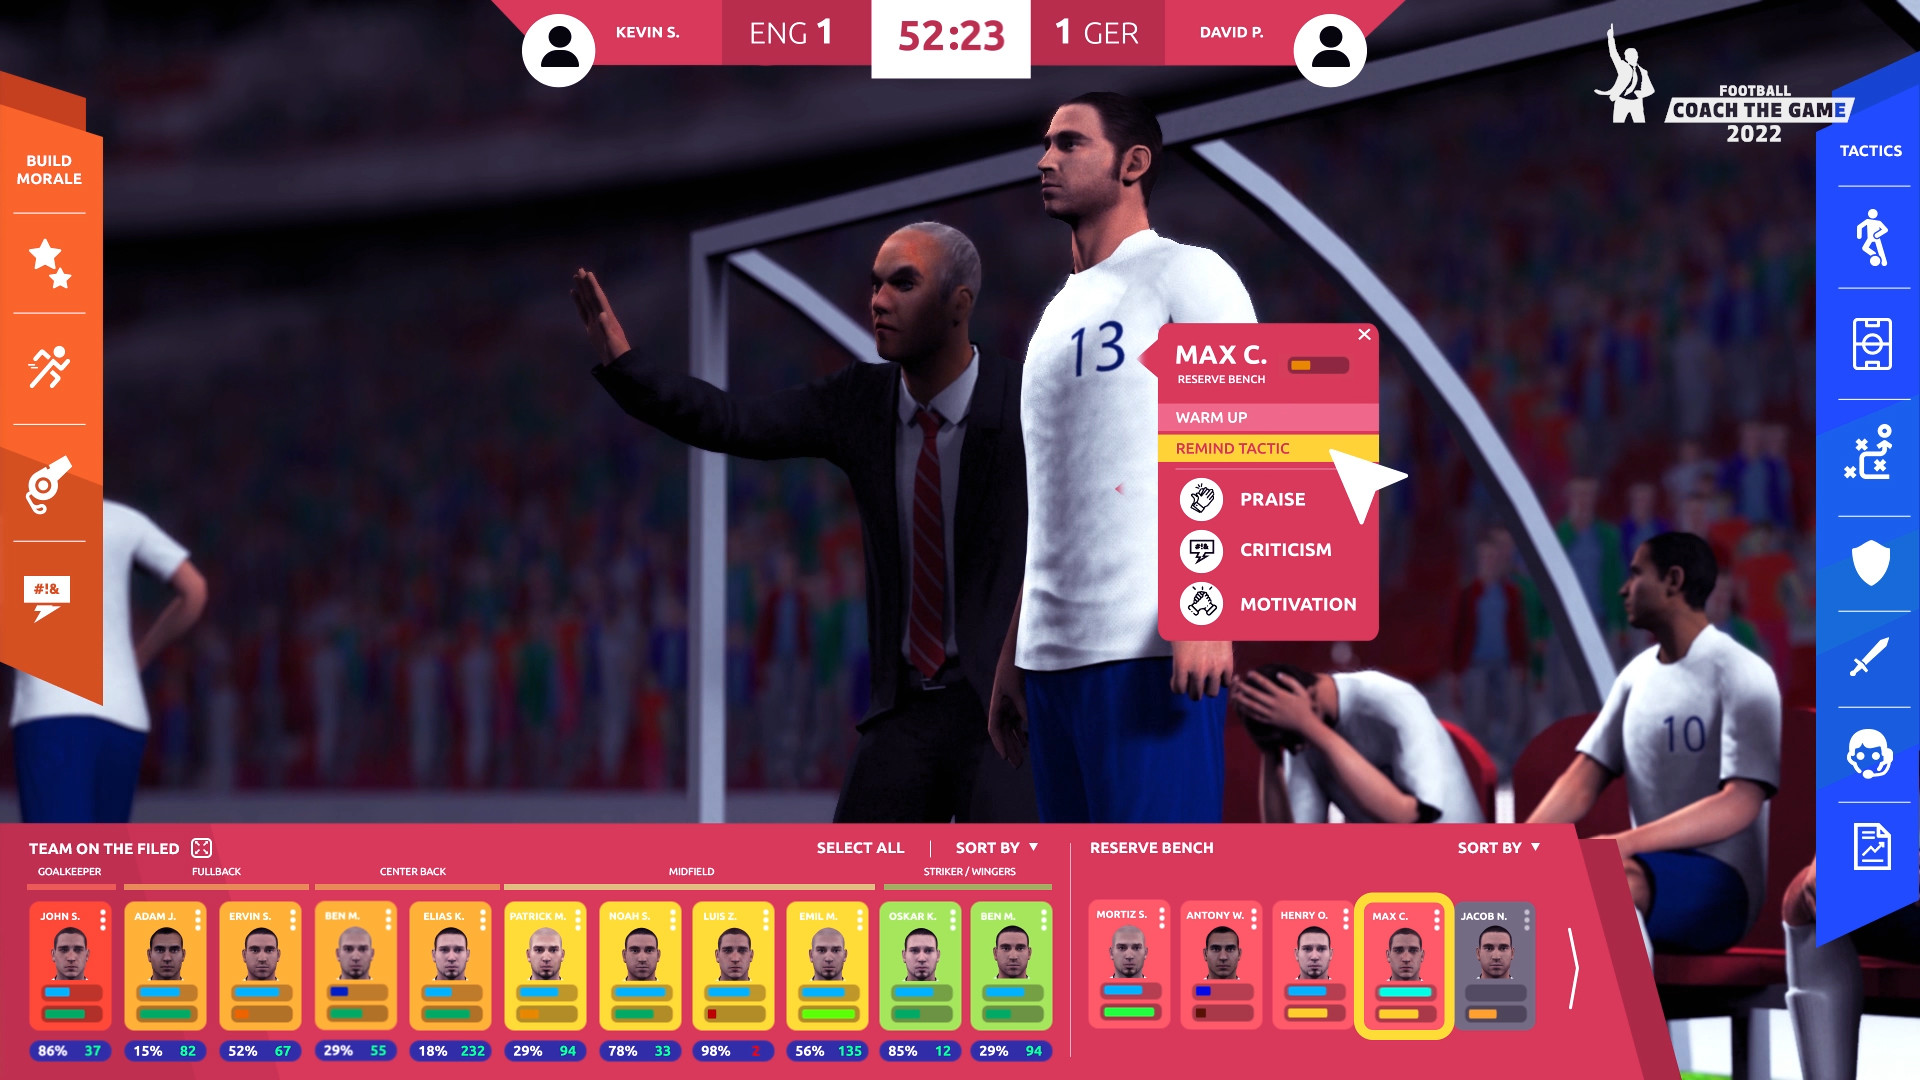 Football Coach the Game 2022 screenshot